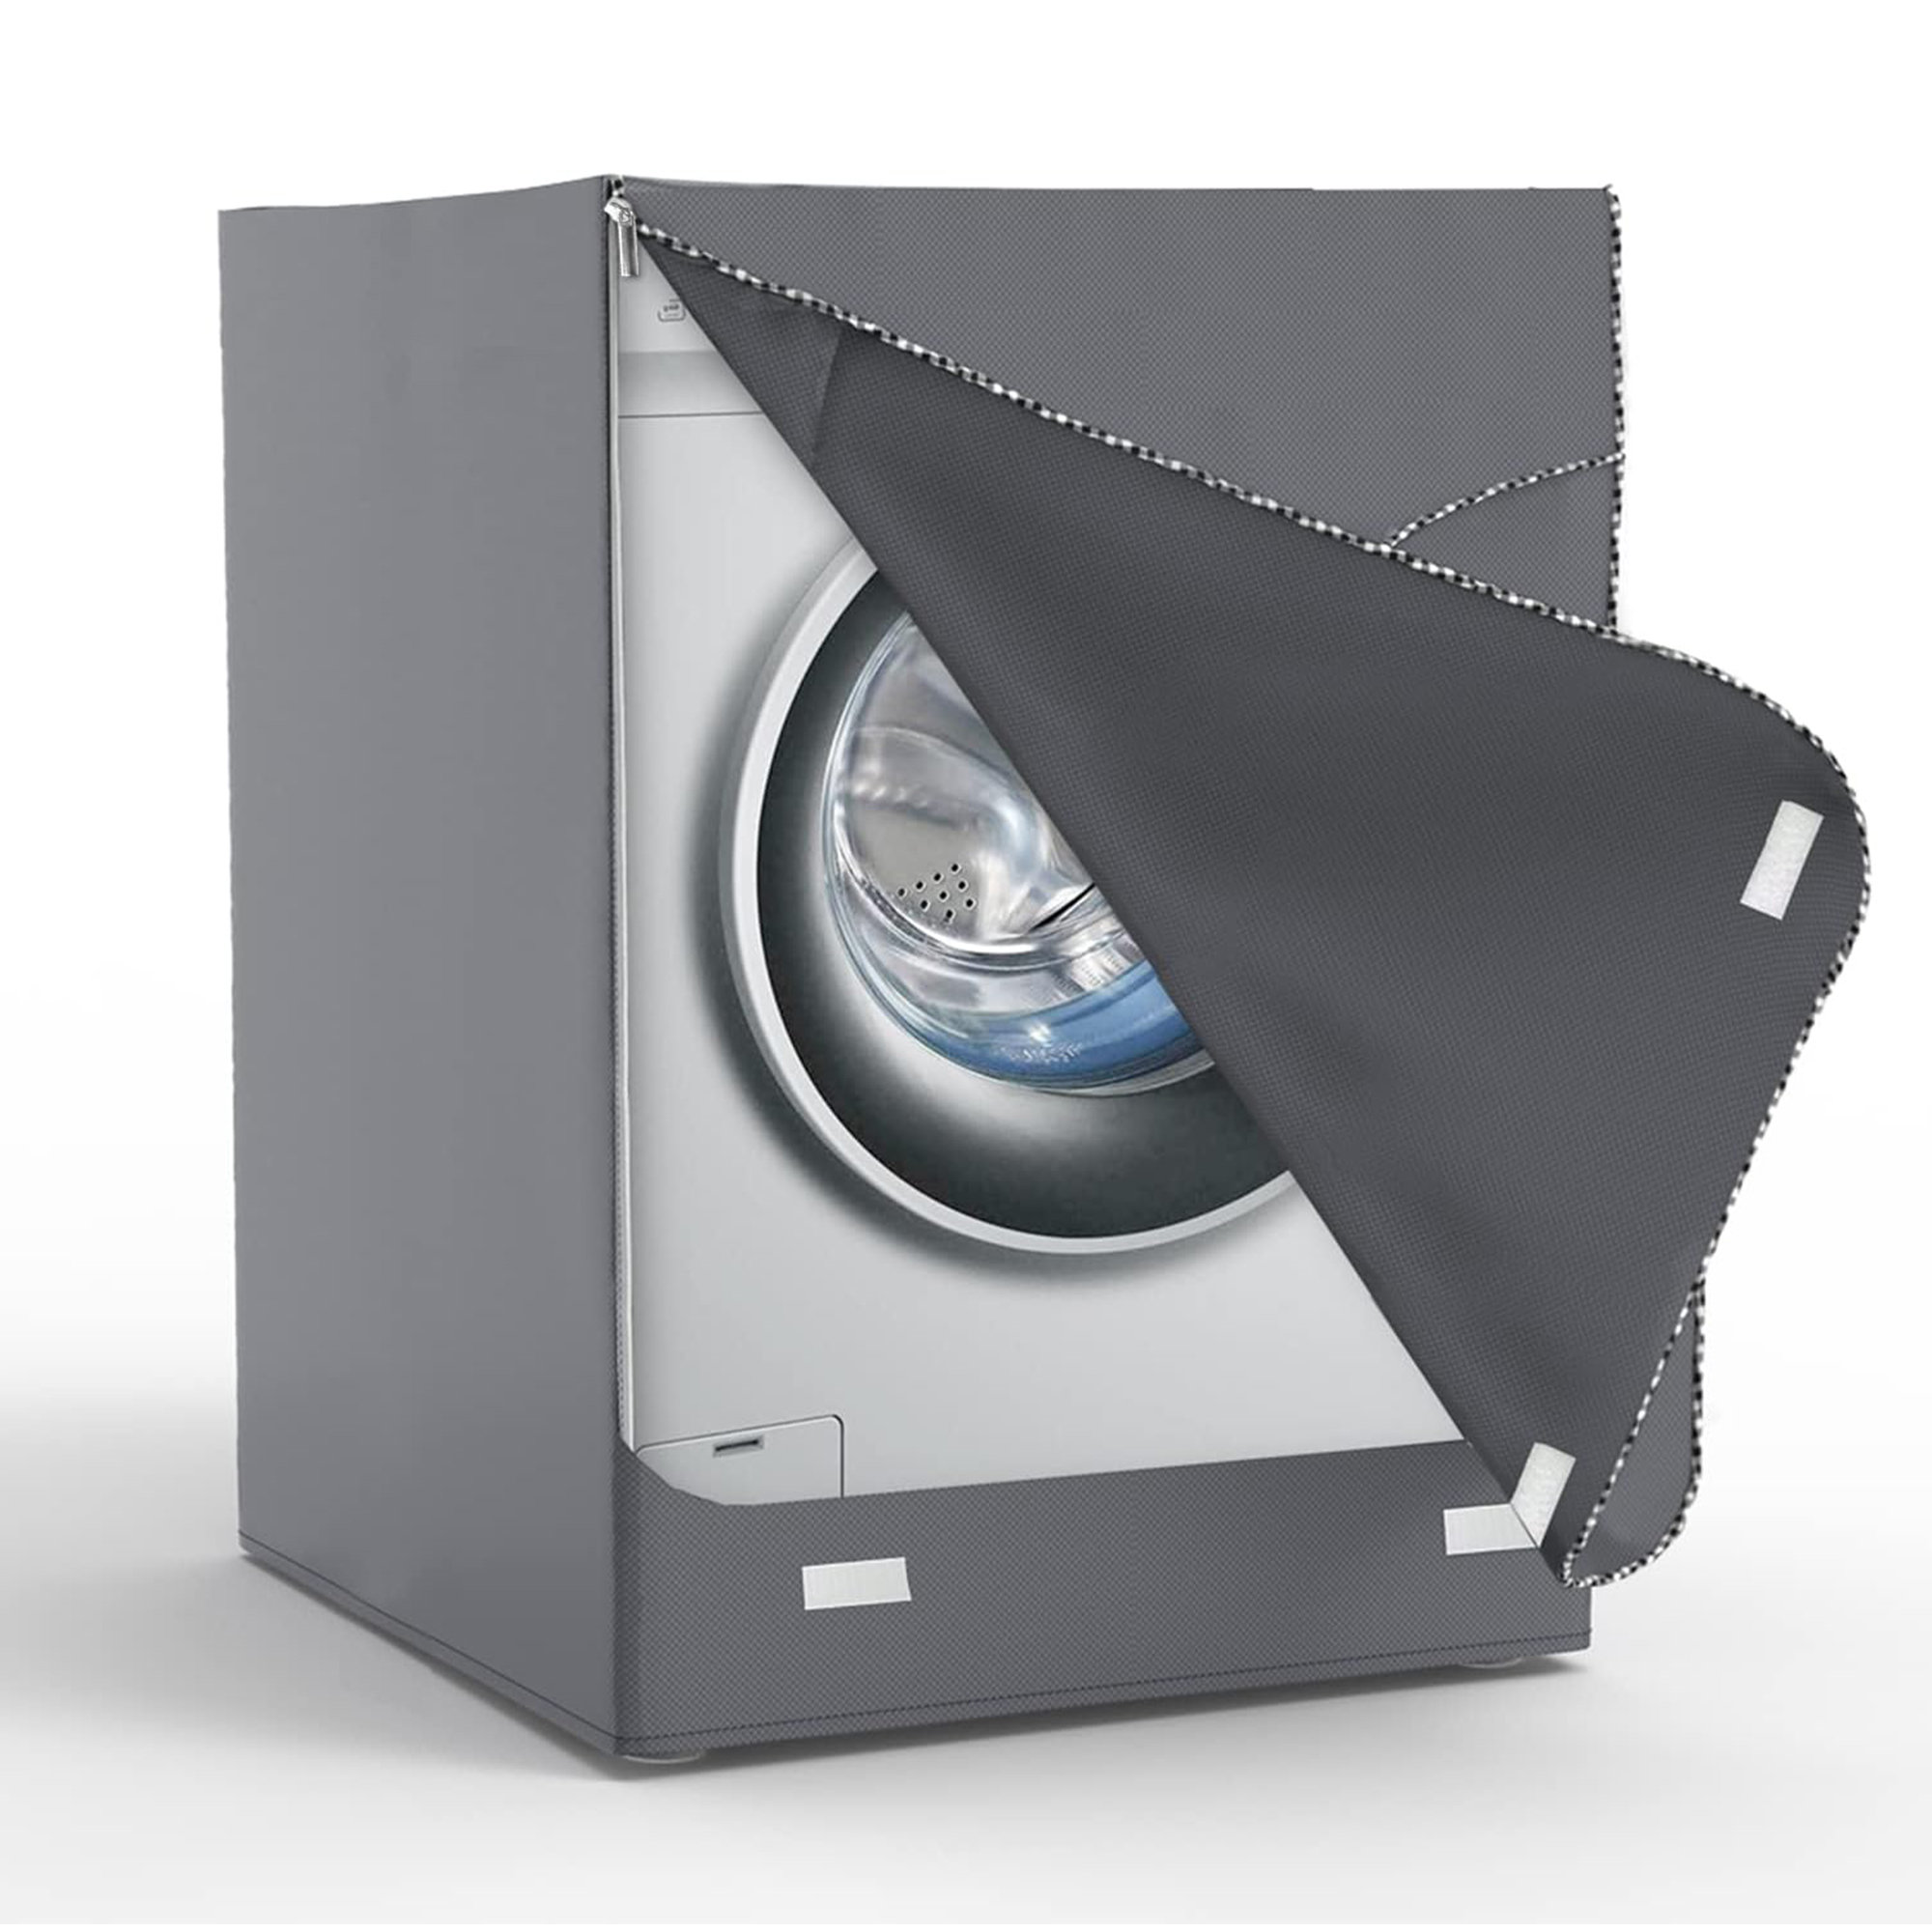 Oatey Universal Washing Machine / Dryer Installation Kit & Reviews